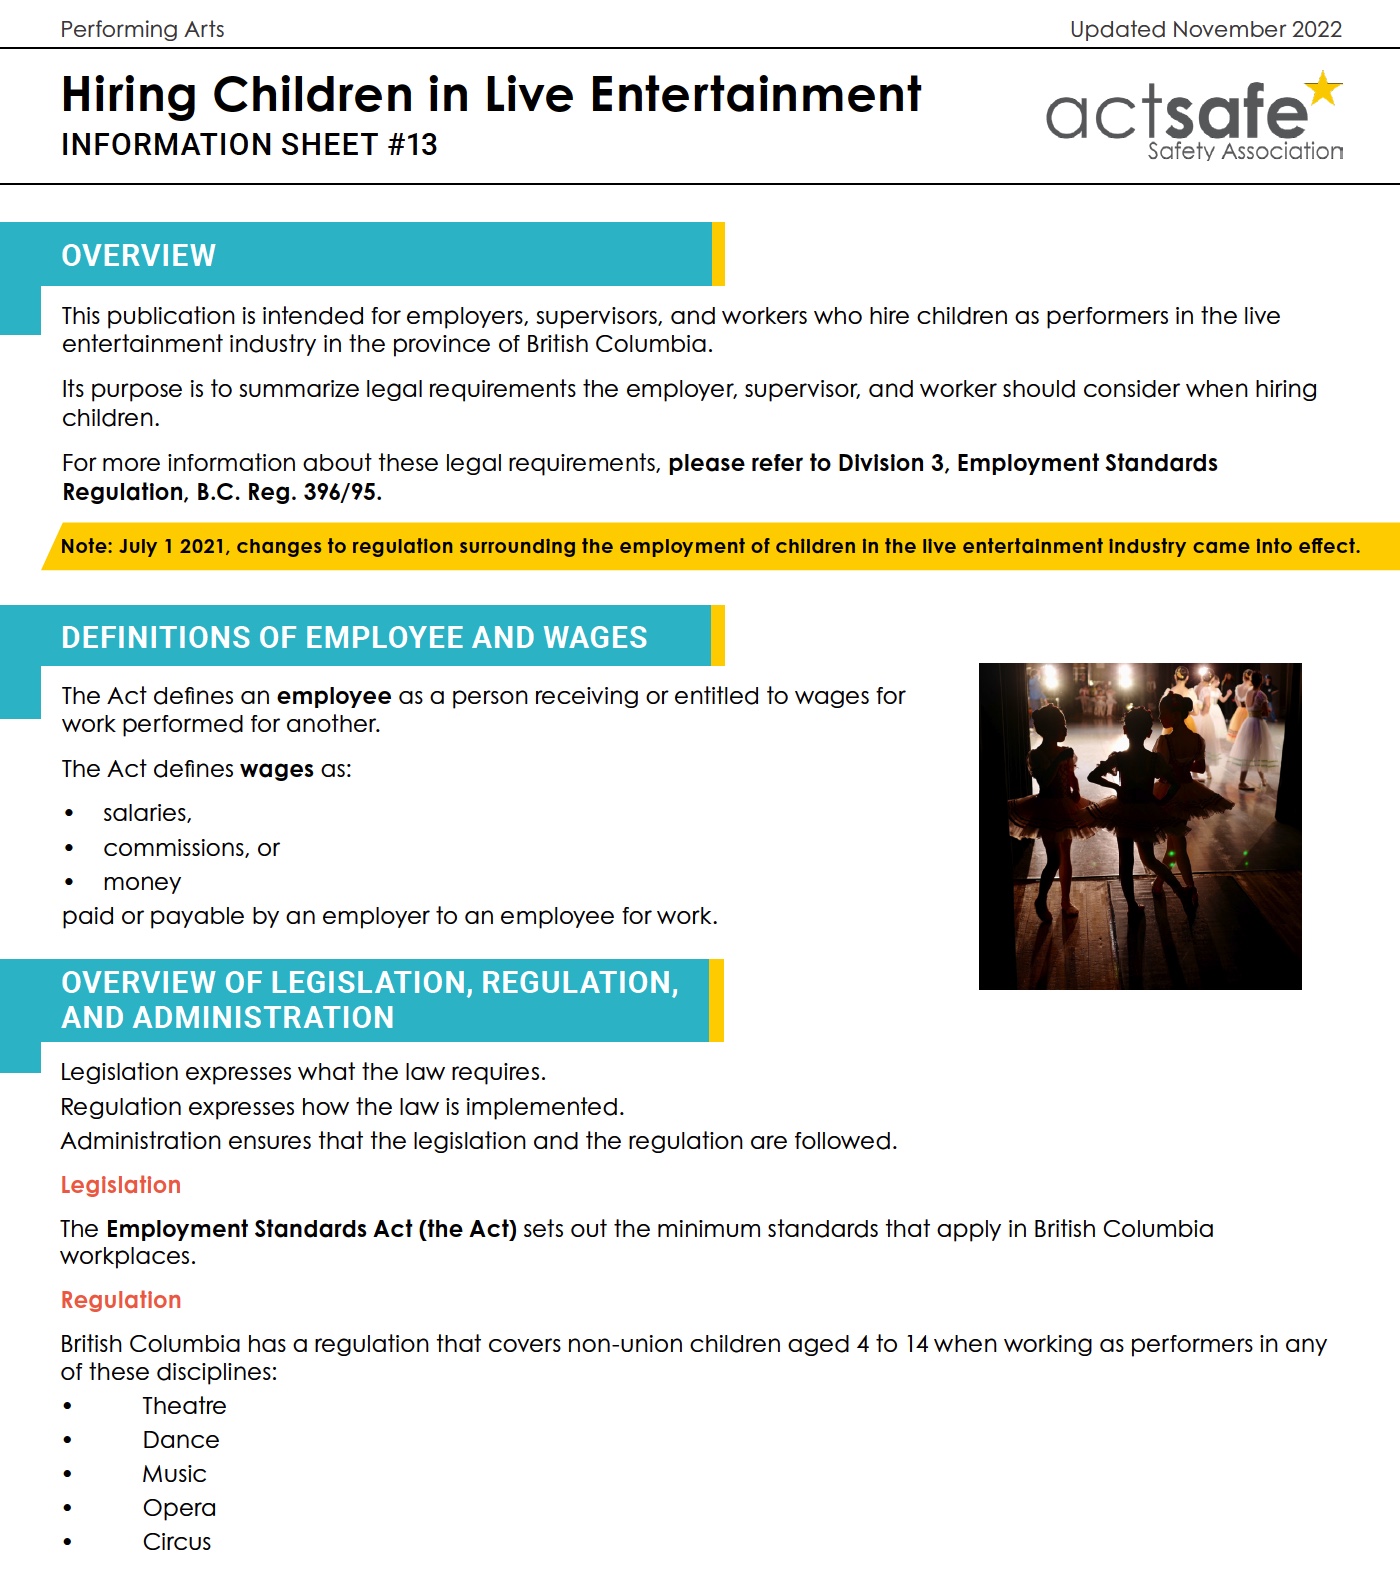 #13 Hiring Children in Live Entertainment Performing Arts Information Sheet